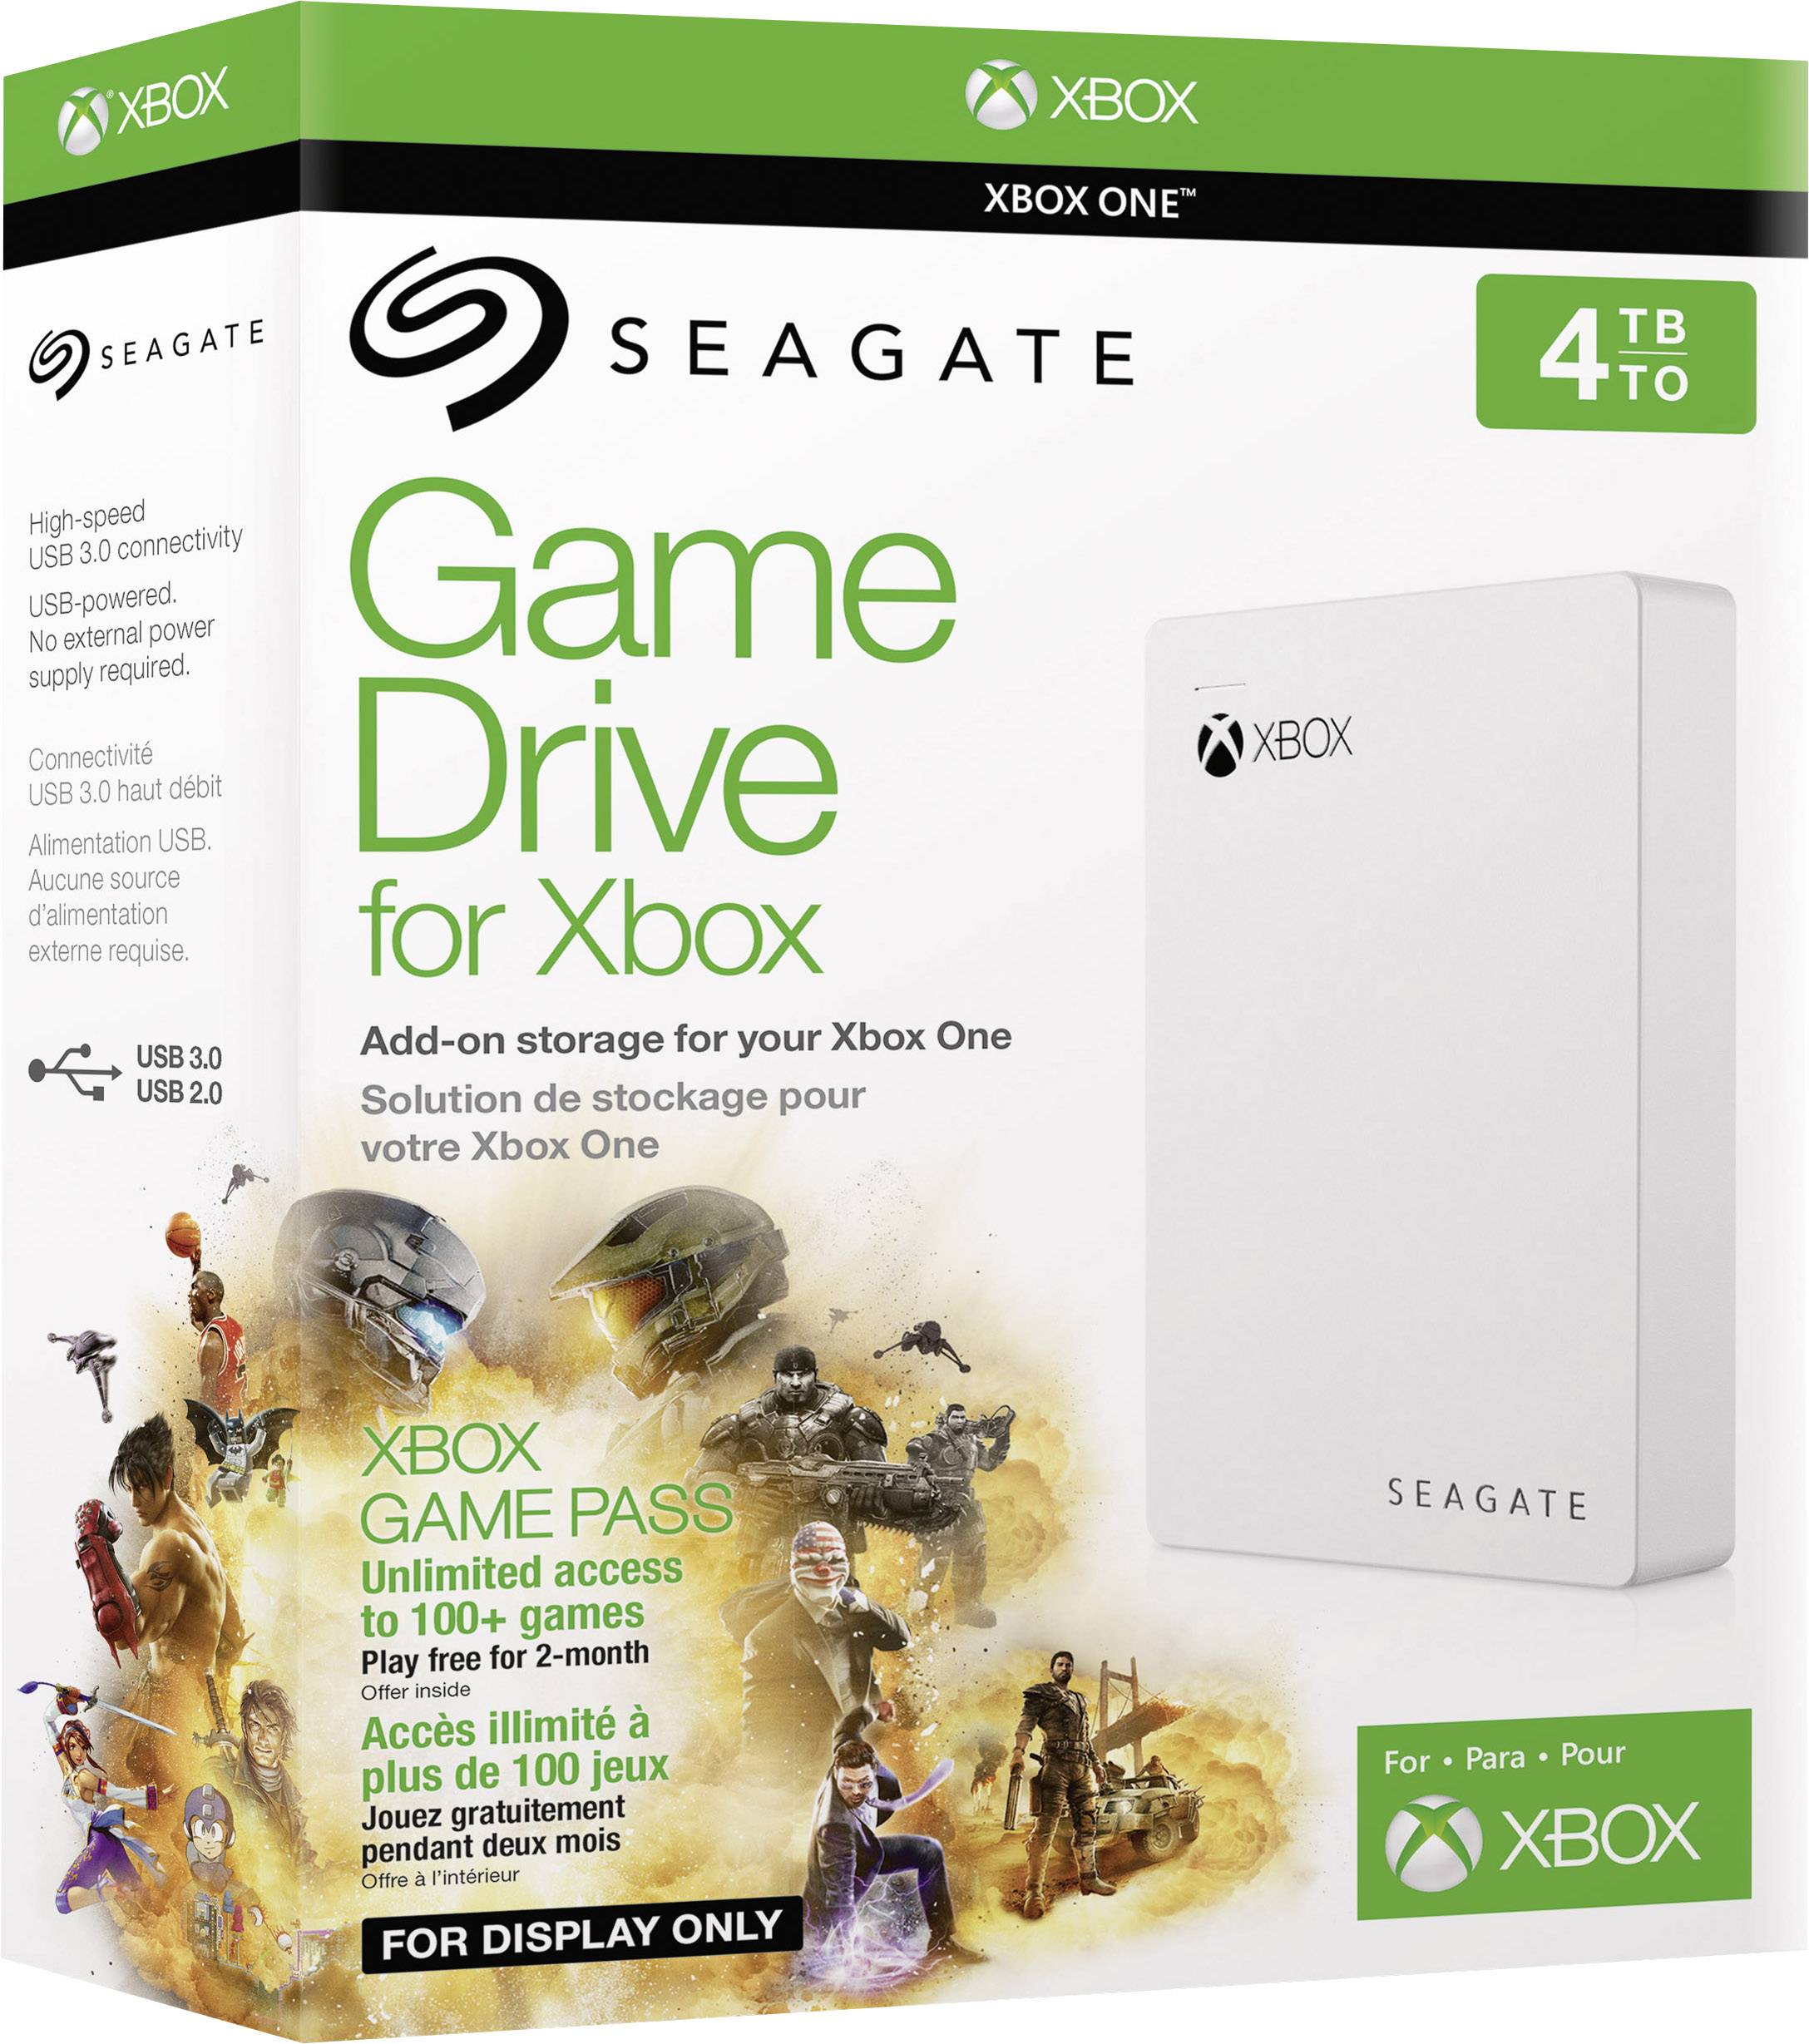 Seagate game Drive for Xbox 4tb.